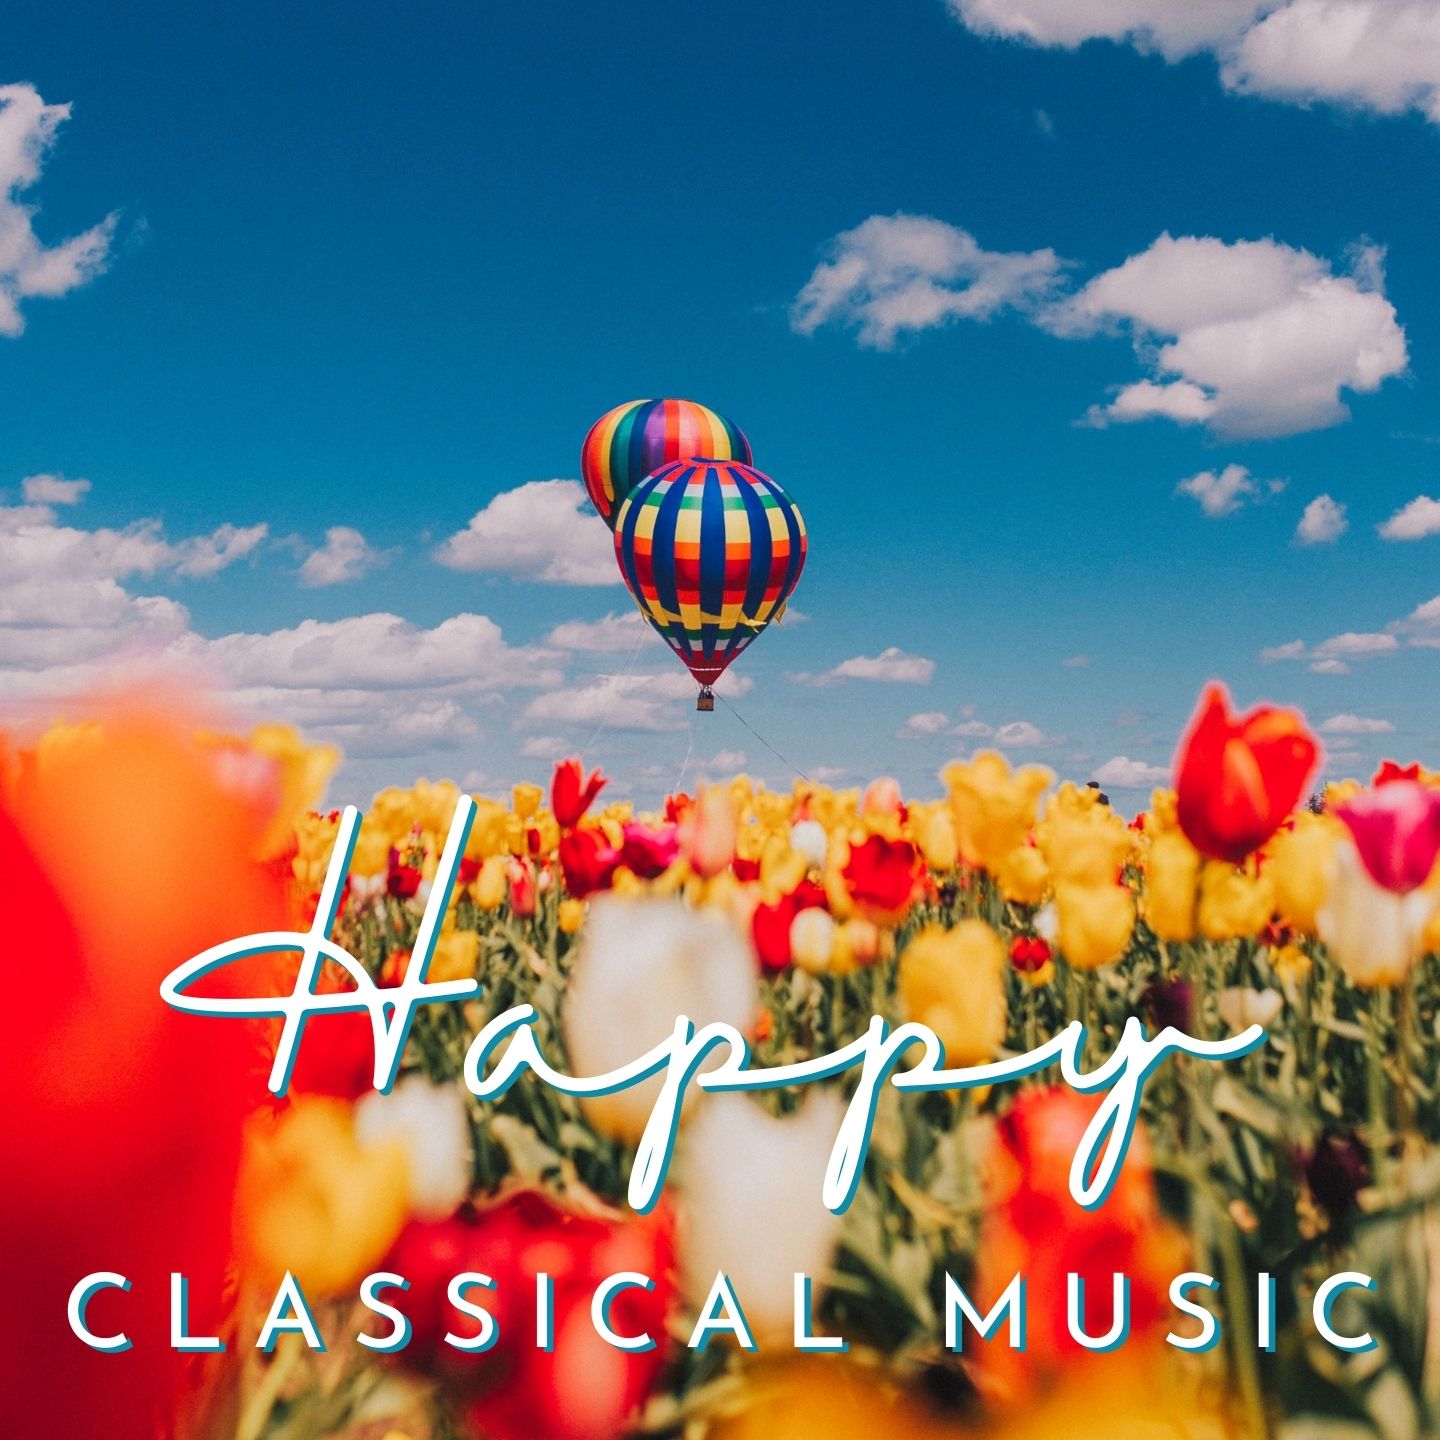 Happy Classical Music